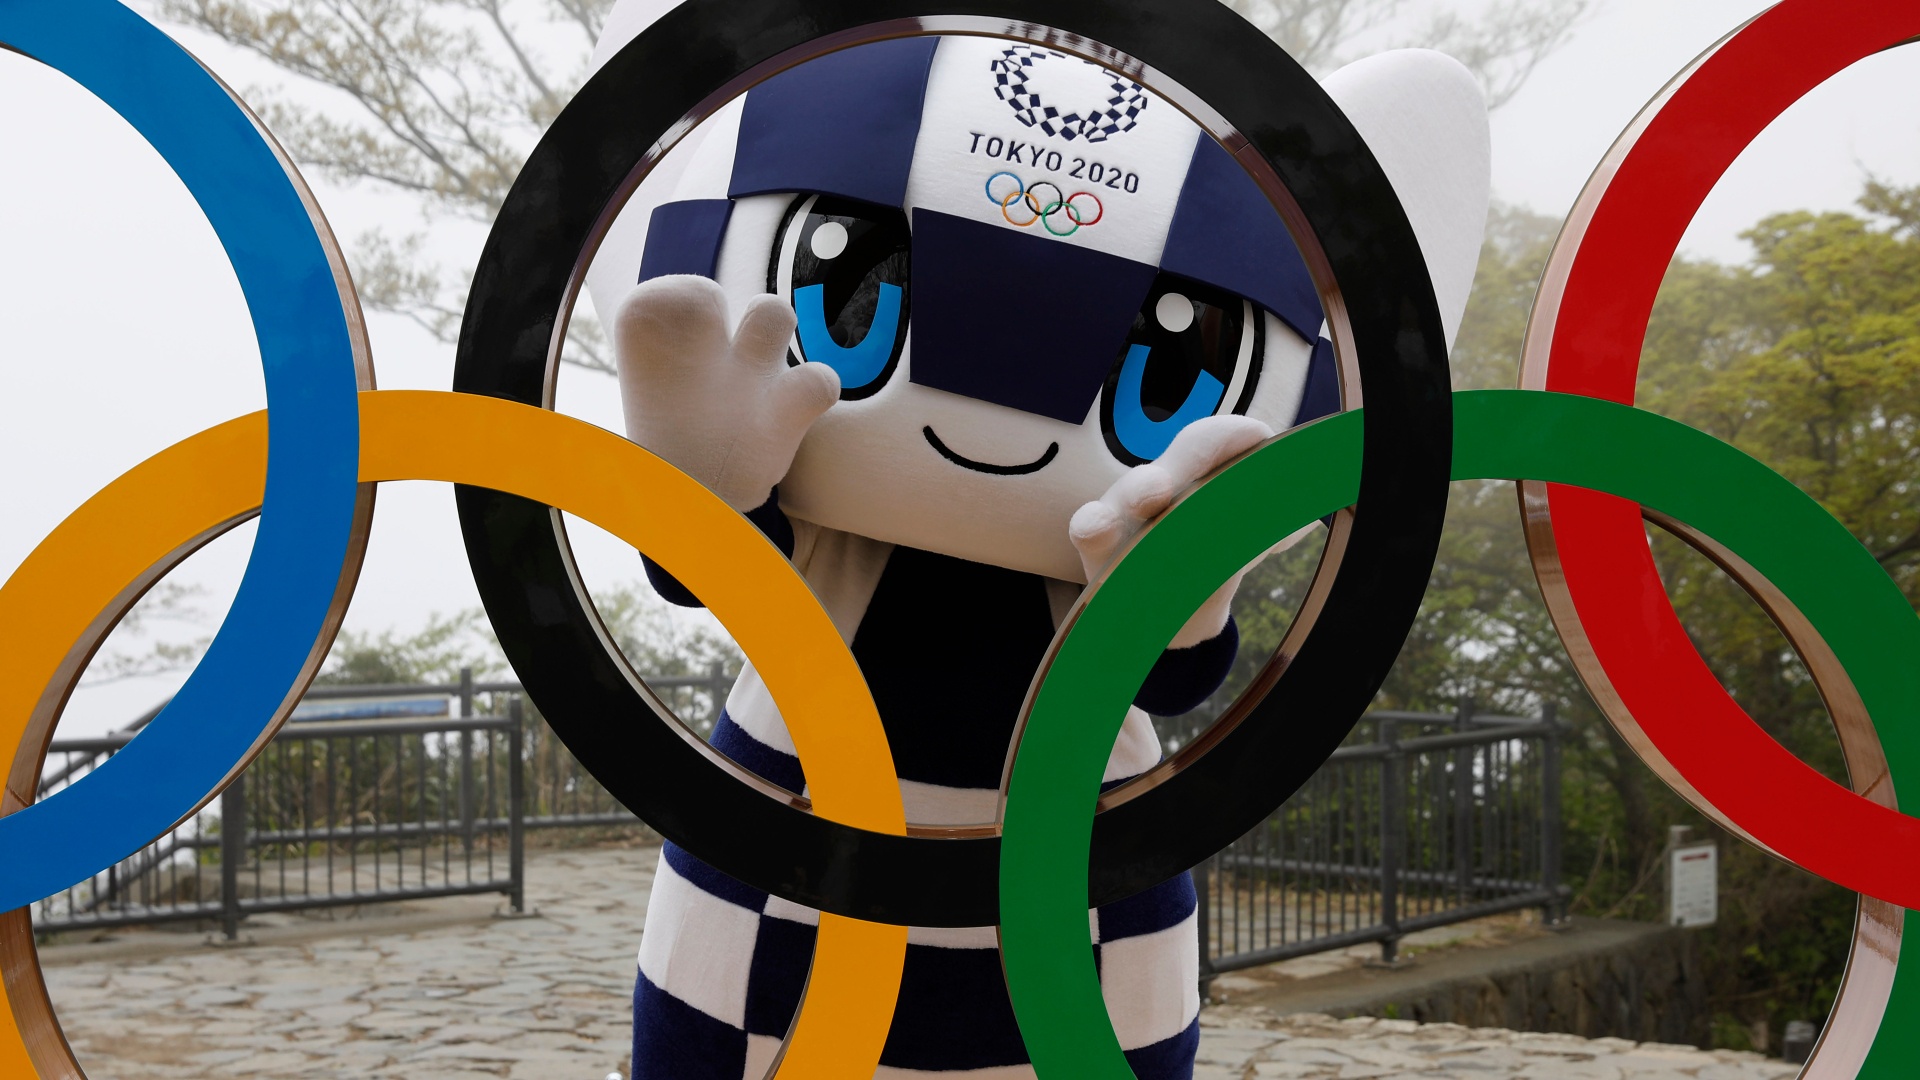 Tokyo 2020 Olympics Wallpaper